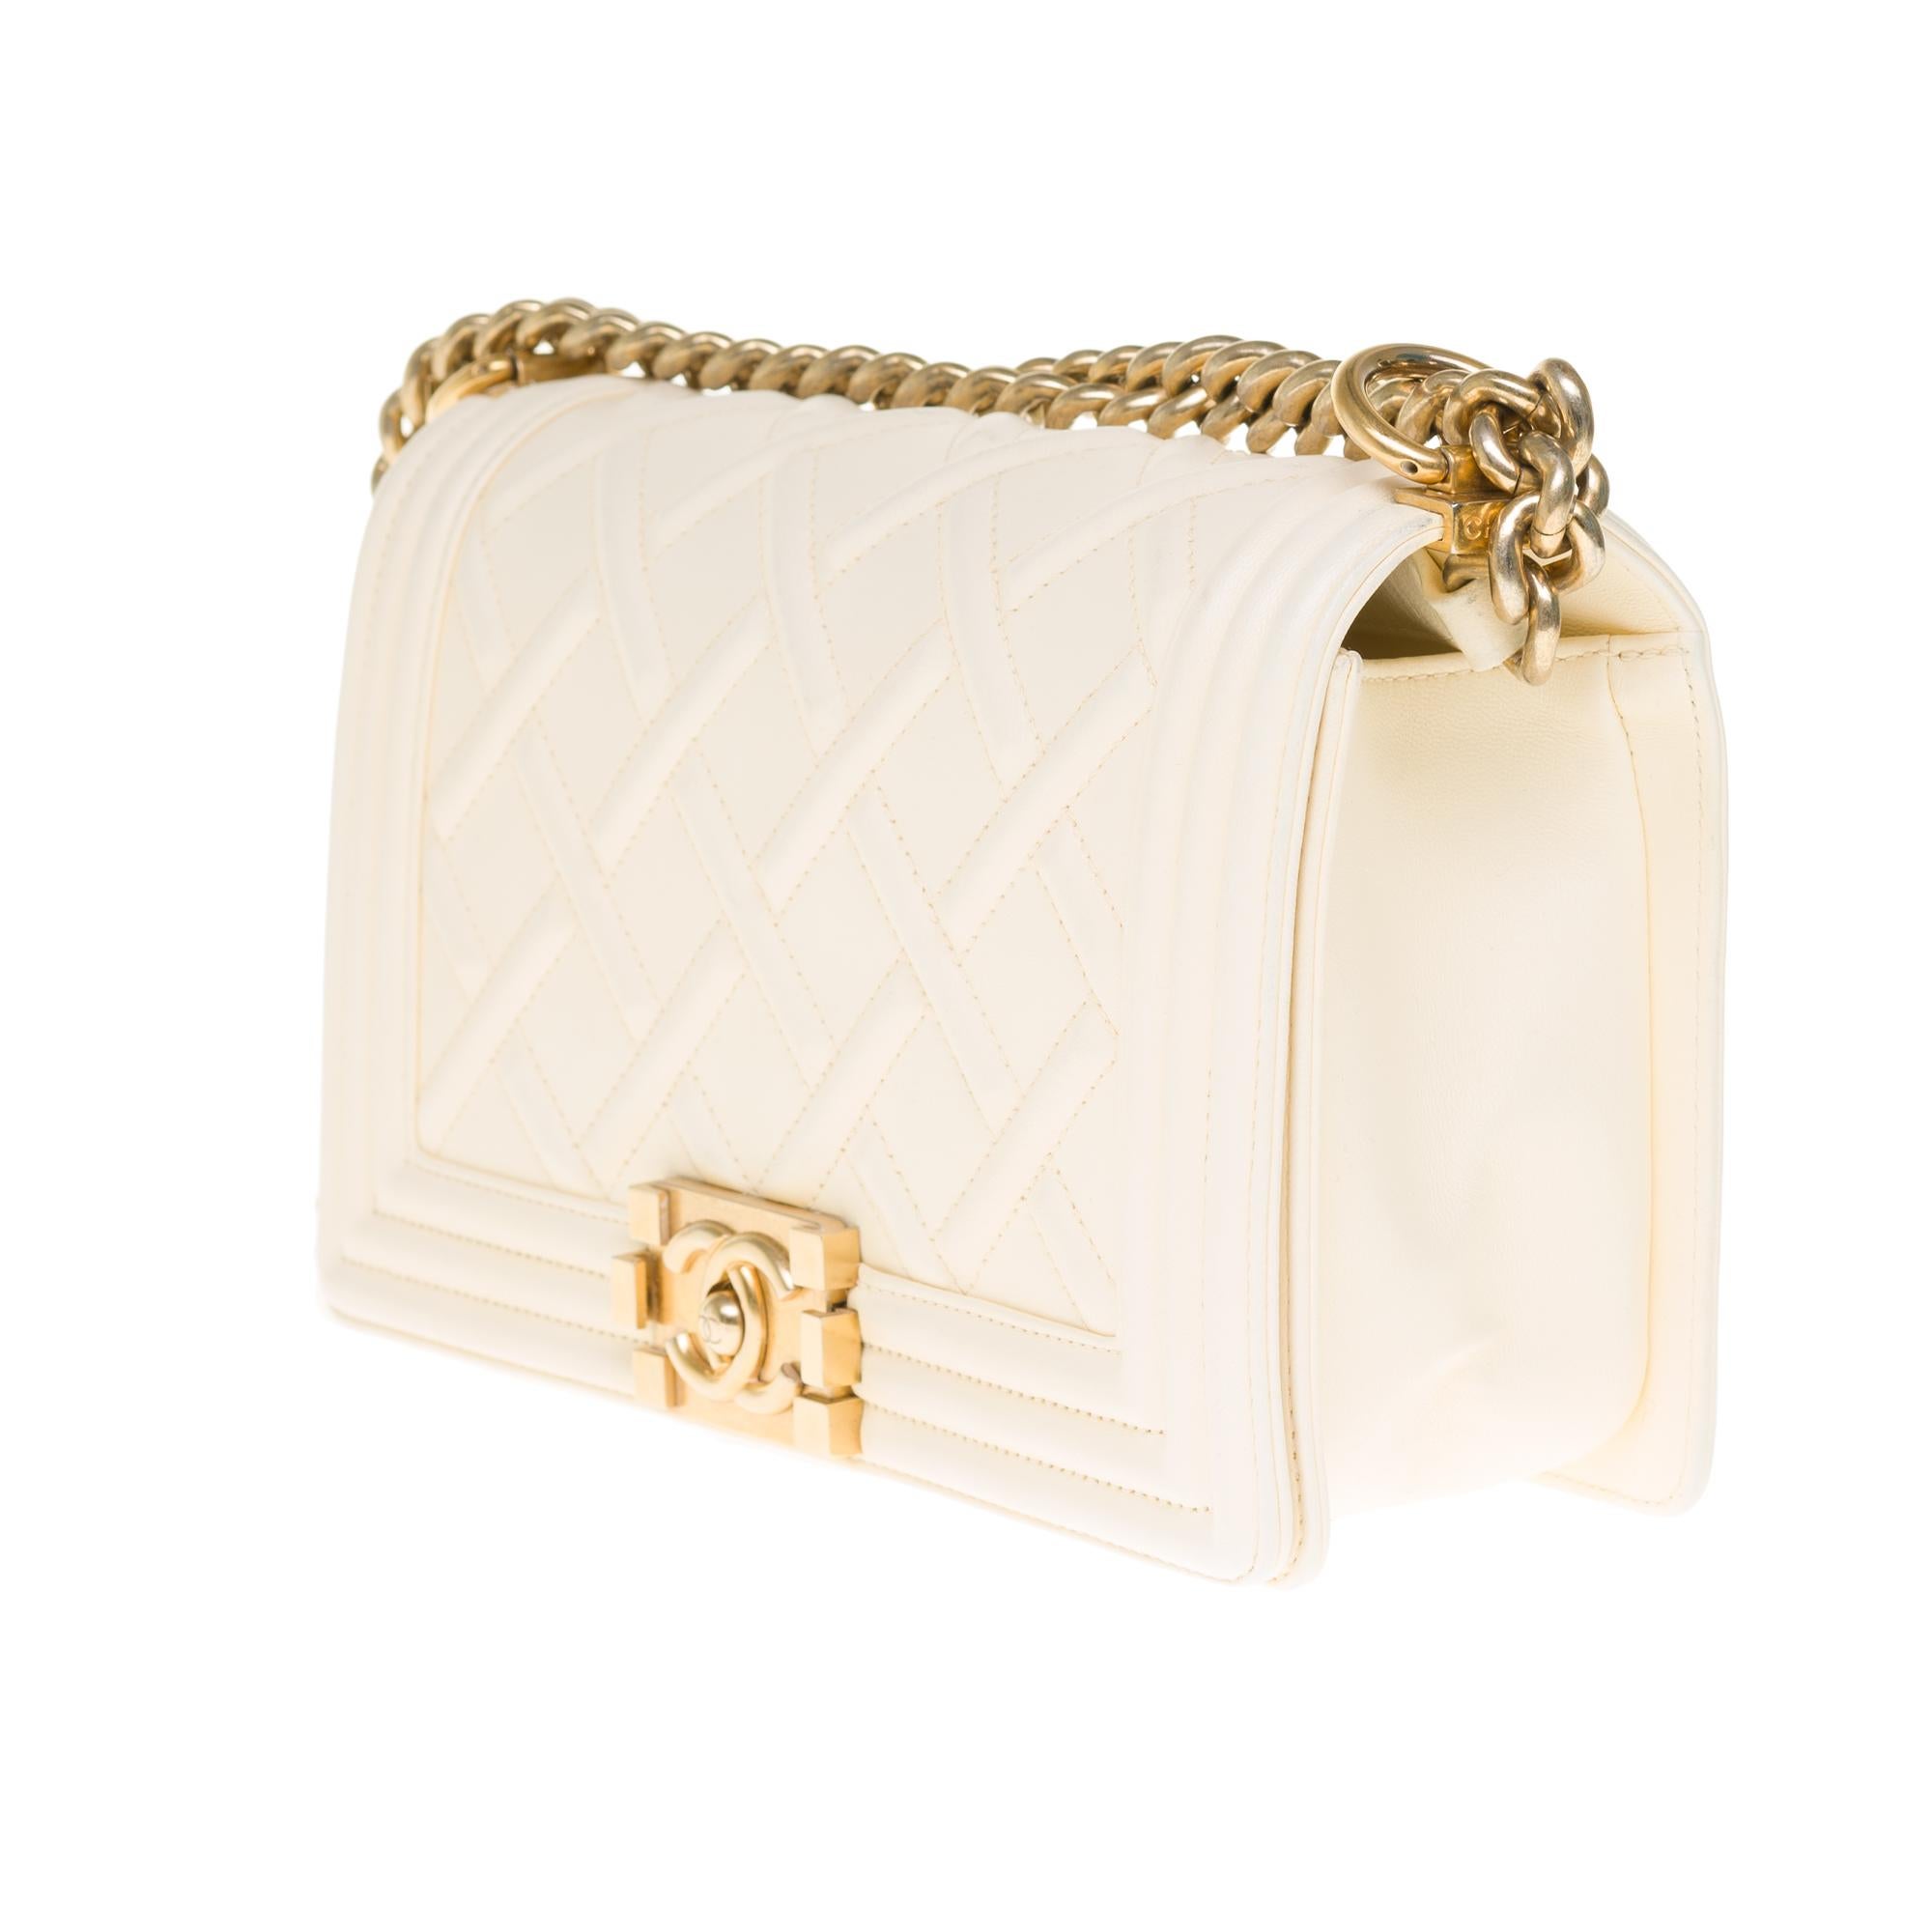 White Chanel Boy Paris/Edinburgh handbag in ivory embossed leather, GHW !